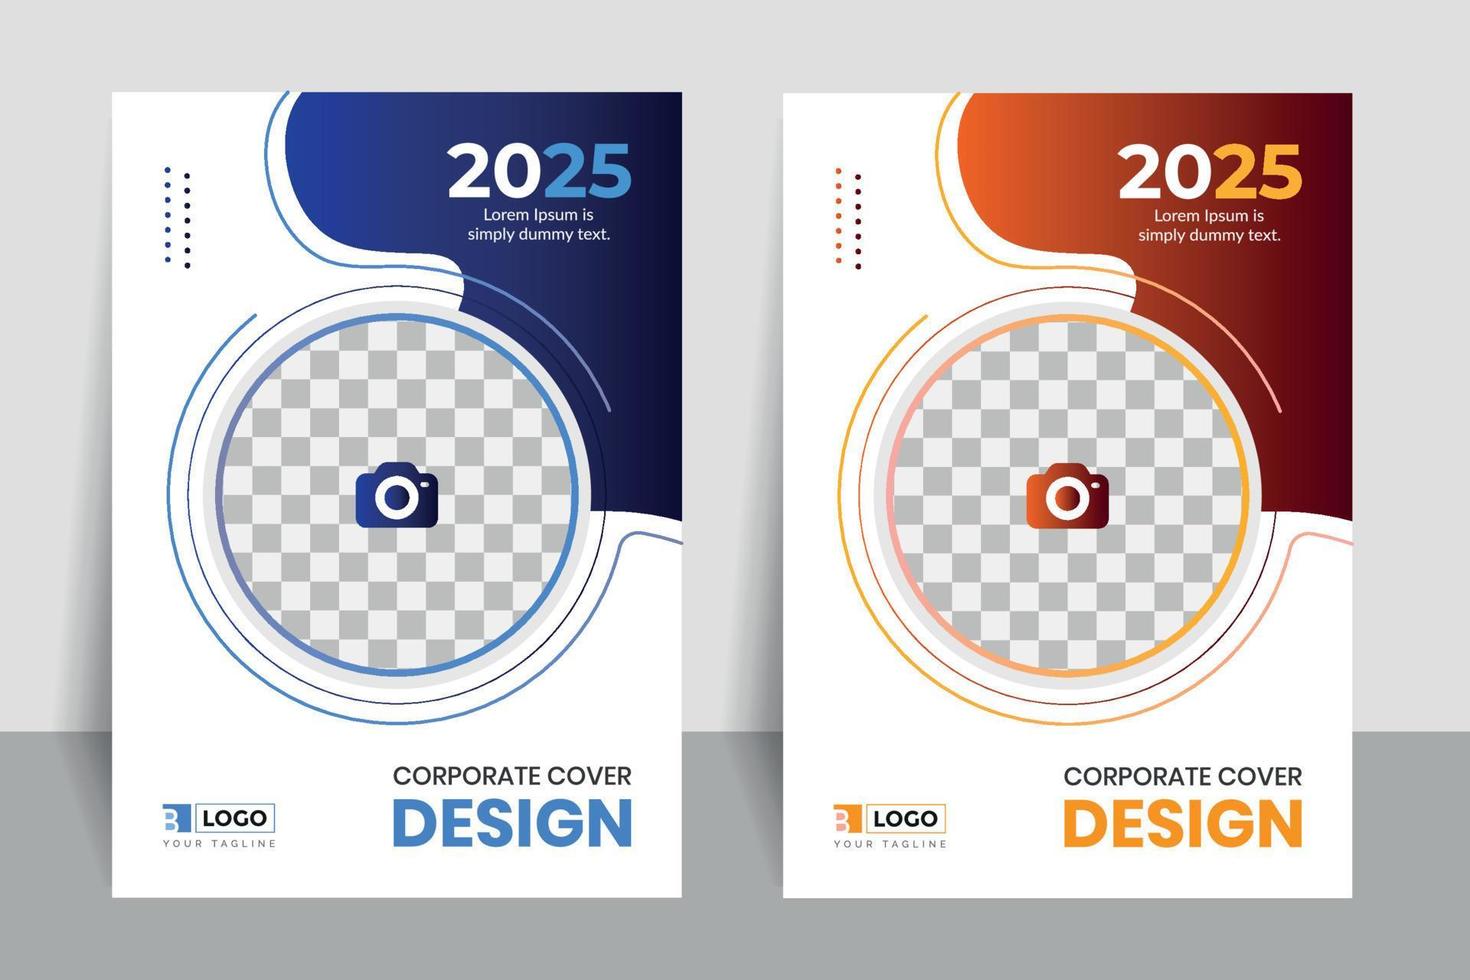 diseño de portada para empresa corporativa, folleto, folleto, creativo, único, revista, volante, dos nuevos conceptos con combinación de colores. vector